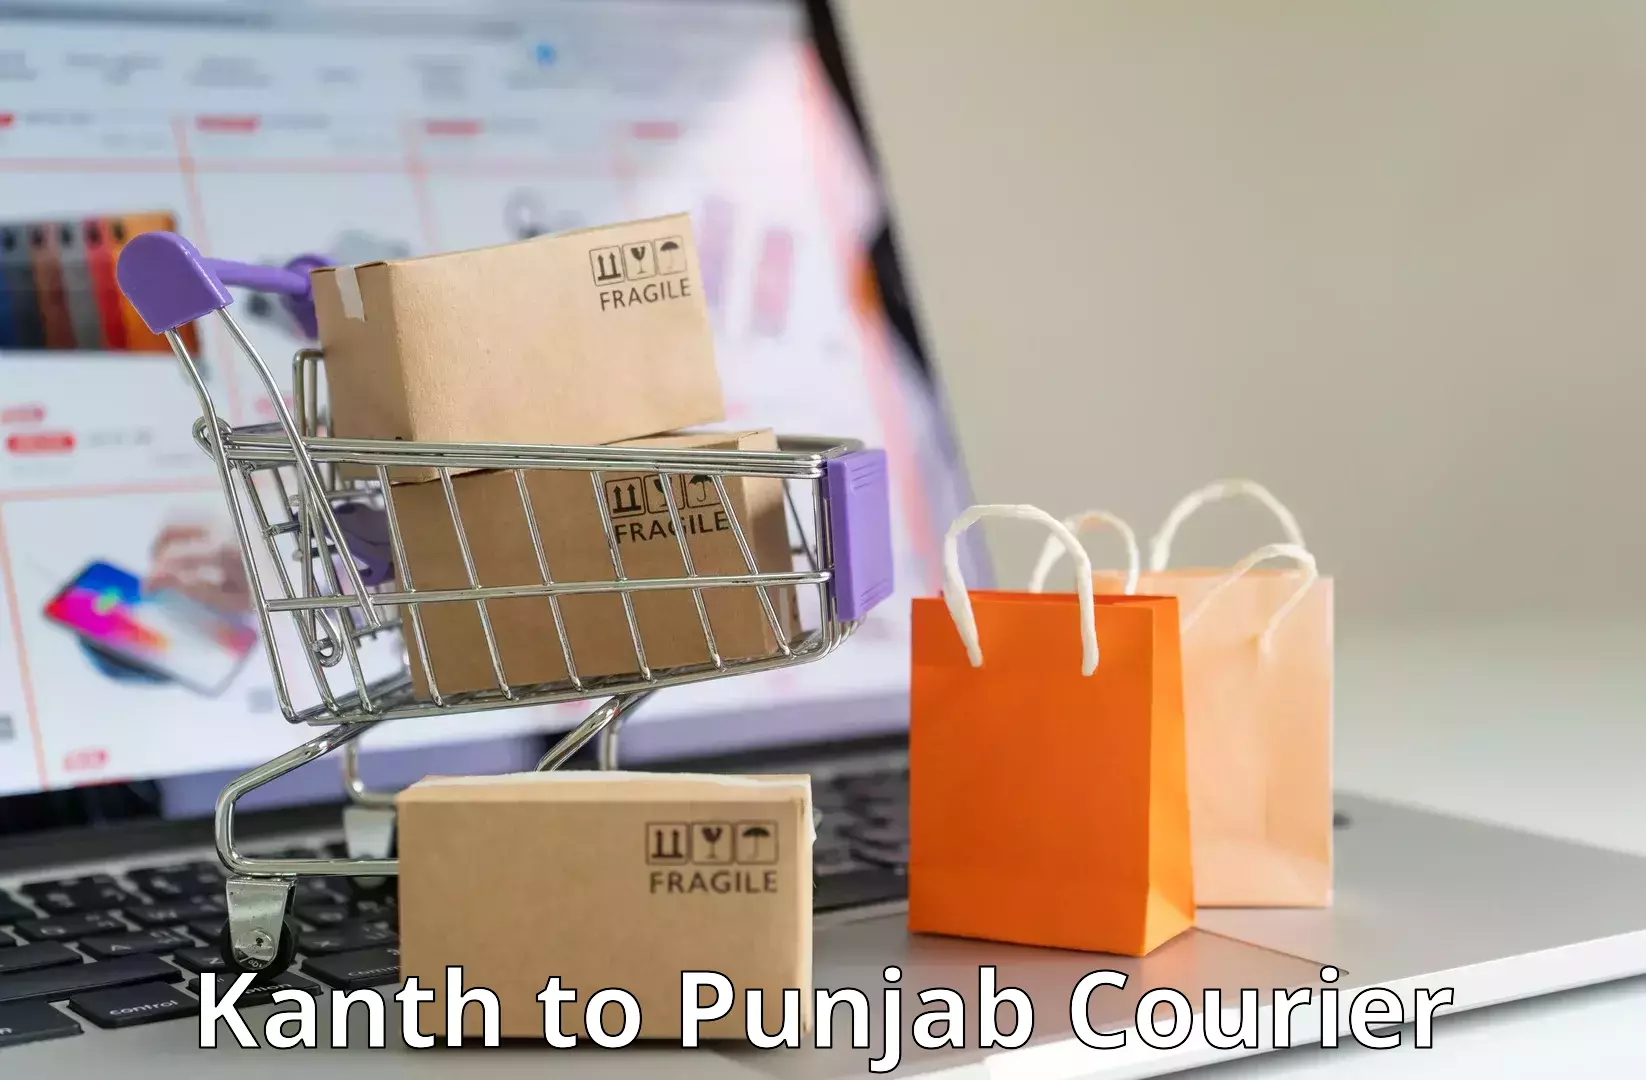 Budget-friendly shipping Kanth to Punjab